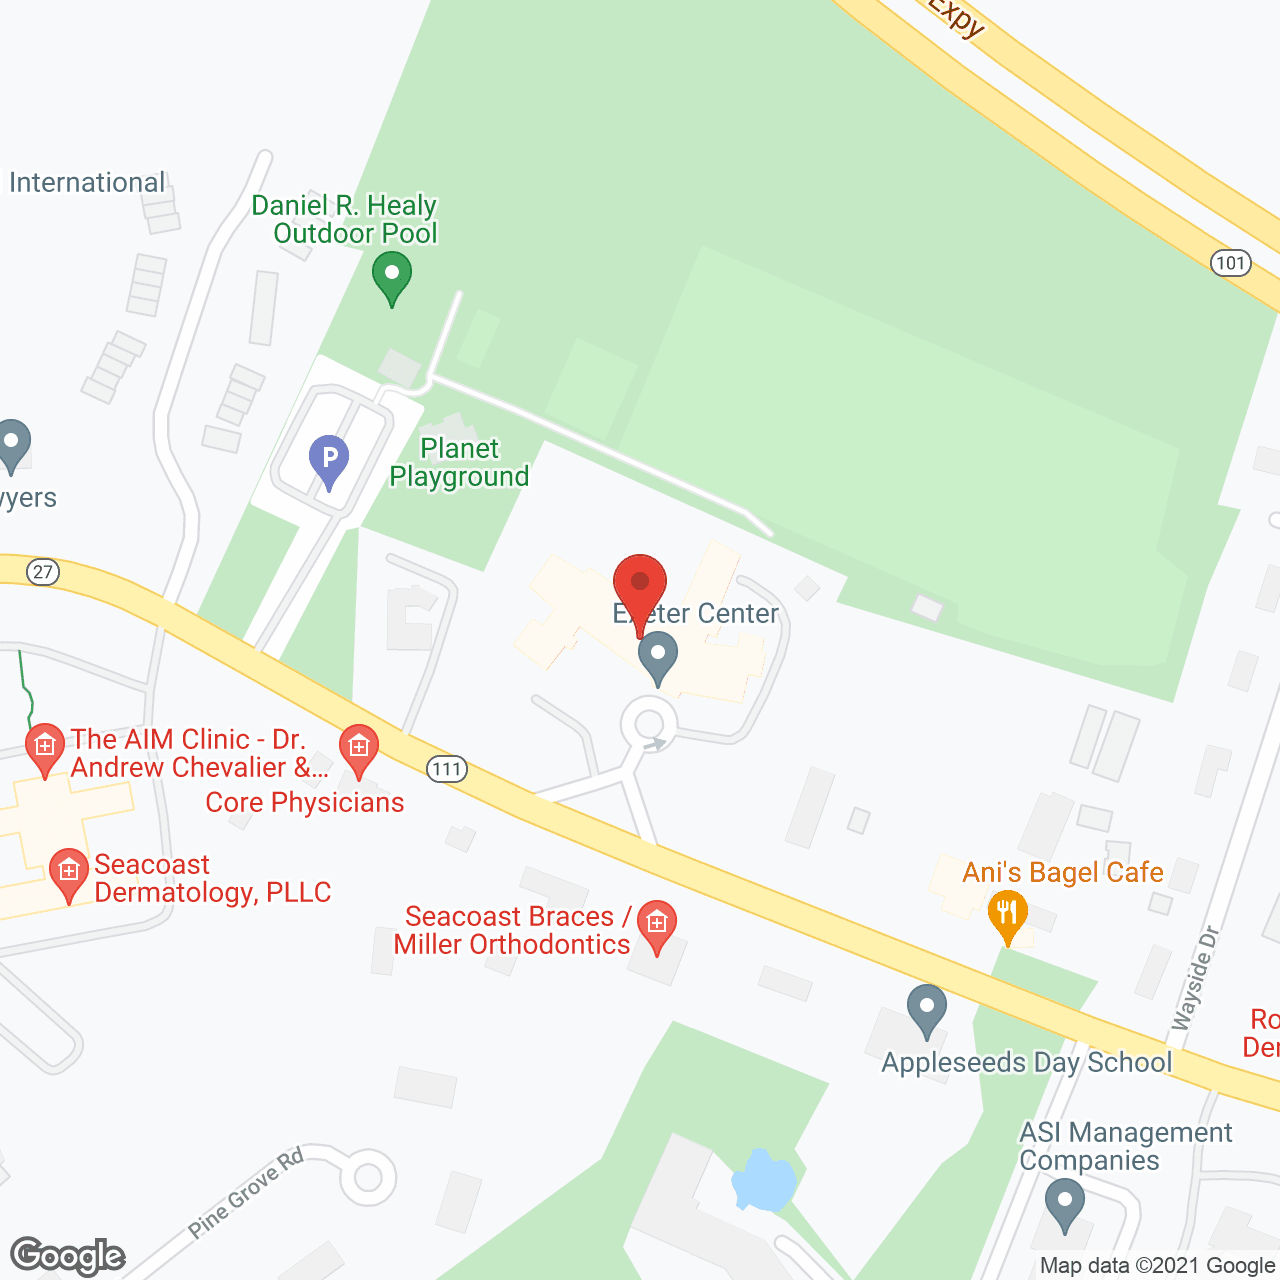 Exeter Center in google map